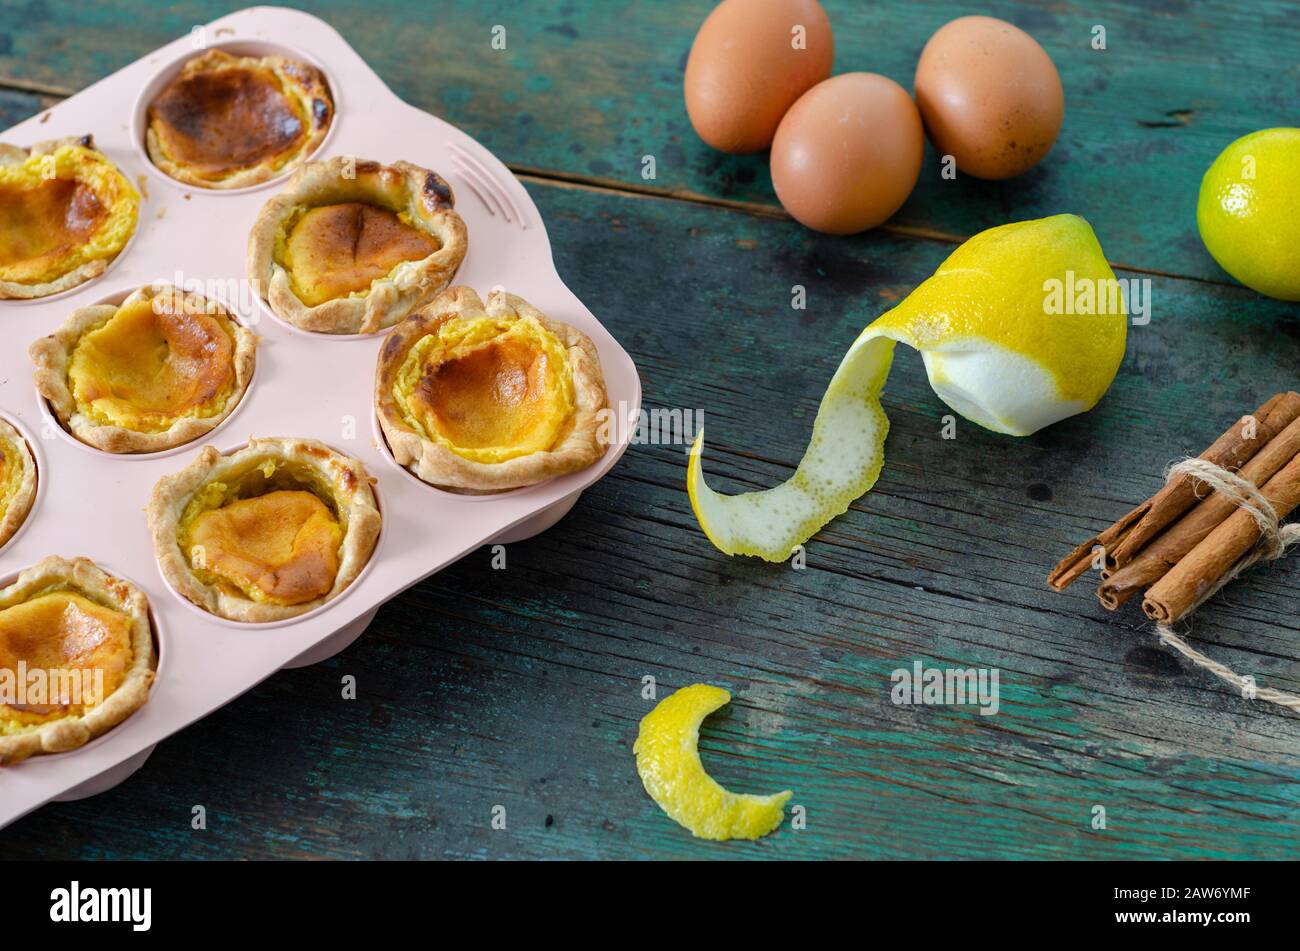 Portuguese egg tart pastry Pastel de nata on the wooden table, Stock Photo